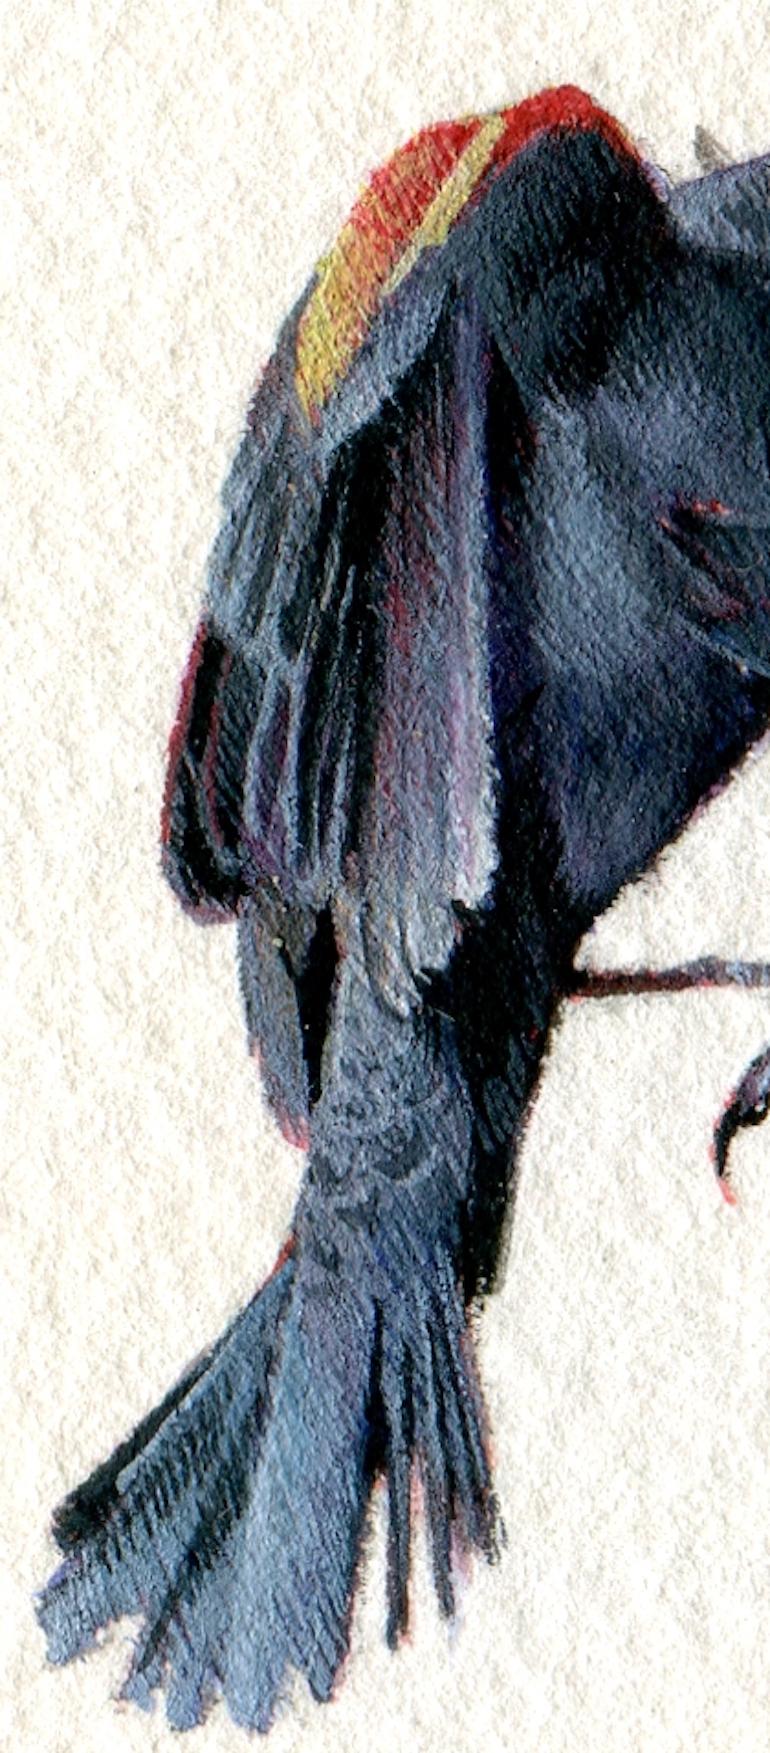 Red-Winged Blackbirds, realist gouache on paper miniature bird portrait, 2020 - Art by Dina Brodsky